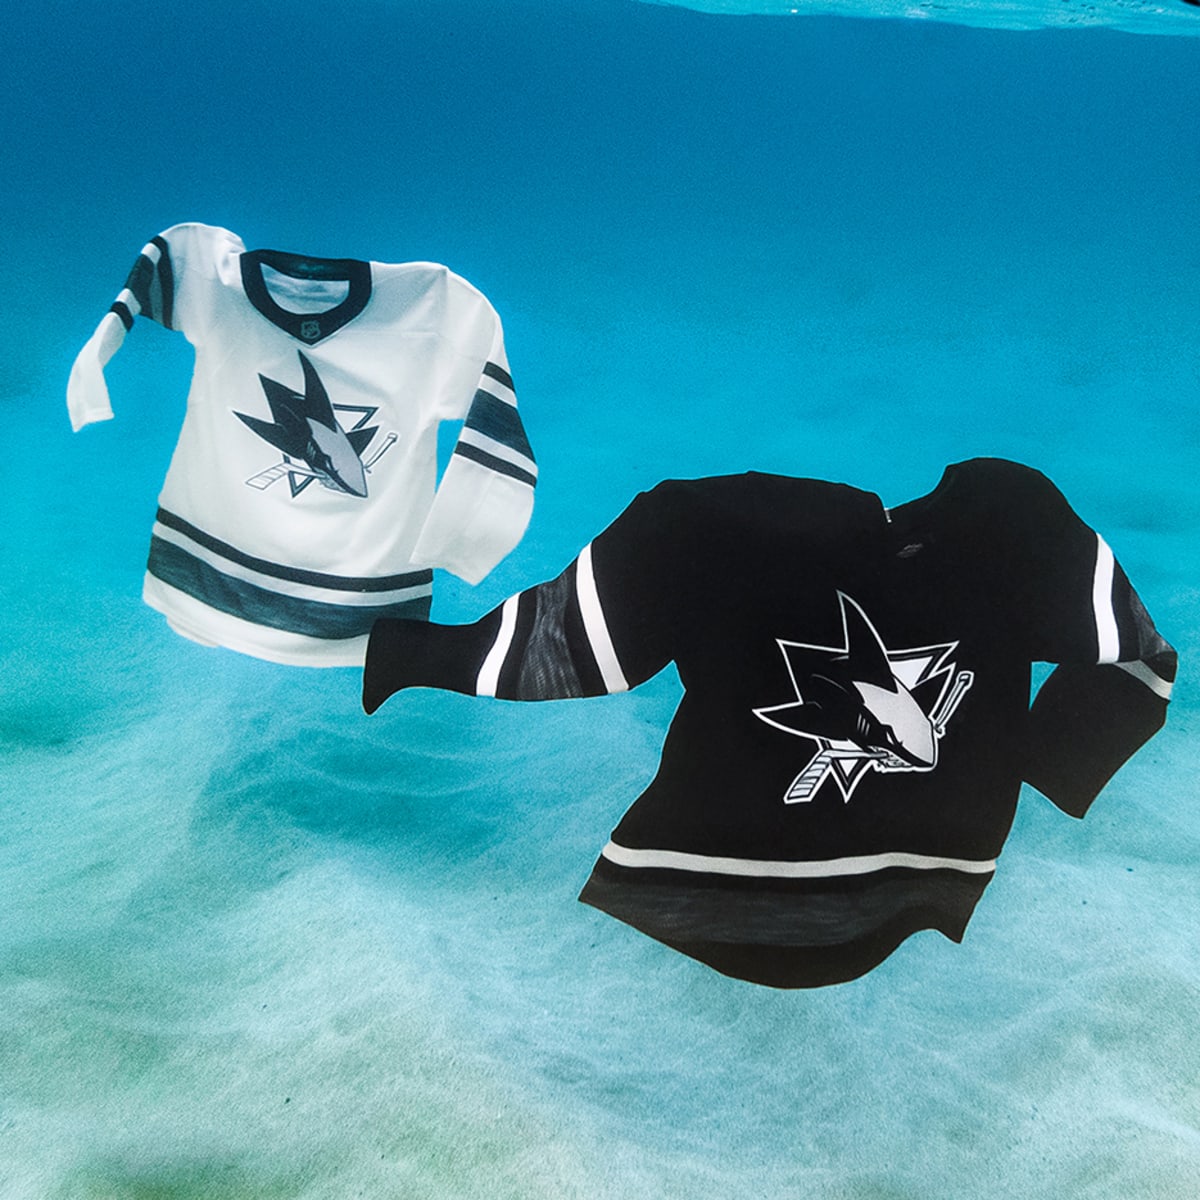 Adidas teases eco-friendly NHL All-Star jerseys —